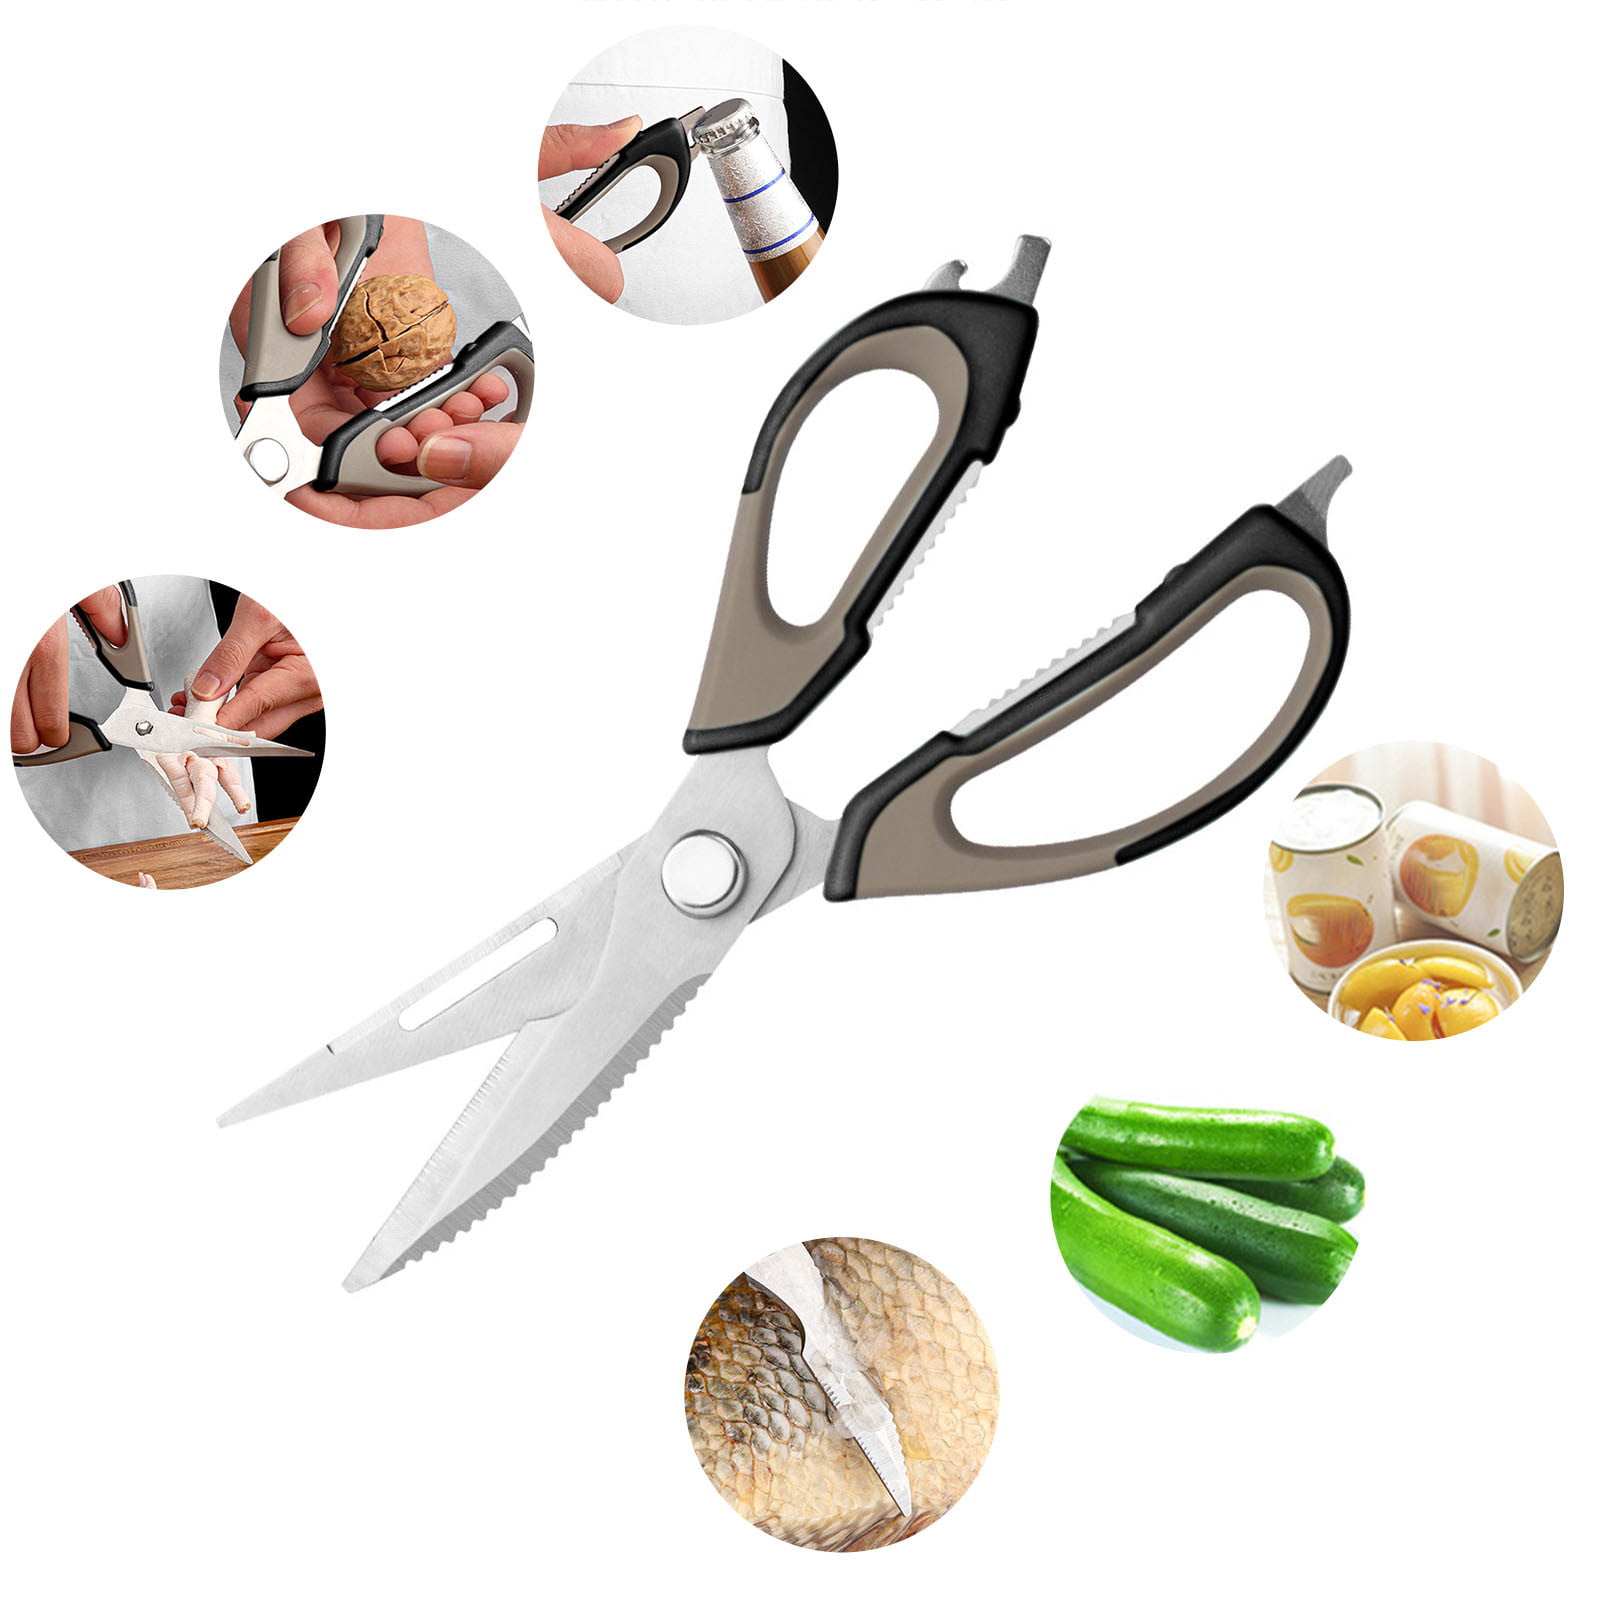 Kitchen Shears/Scissors by Club Chef – Club Chef